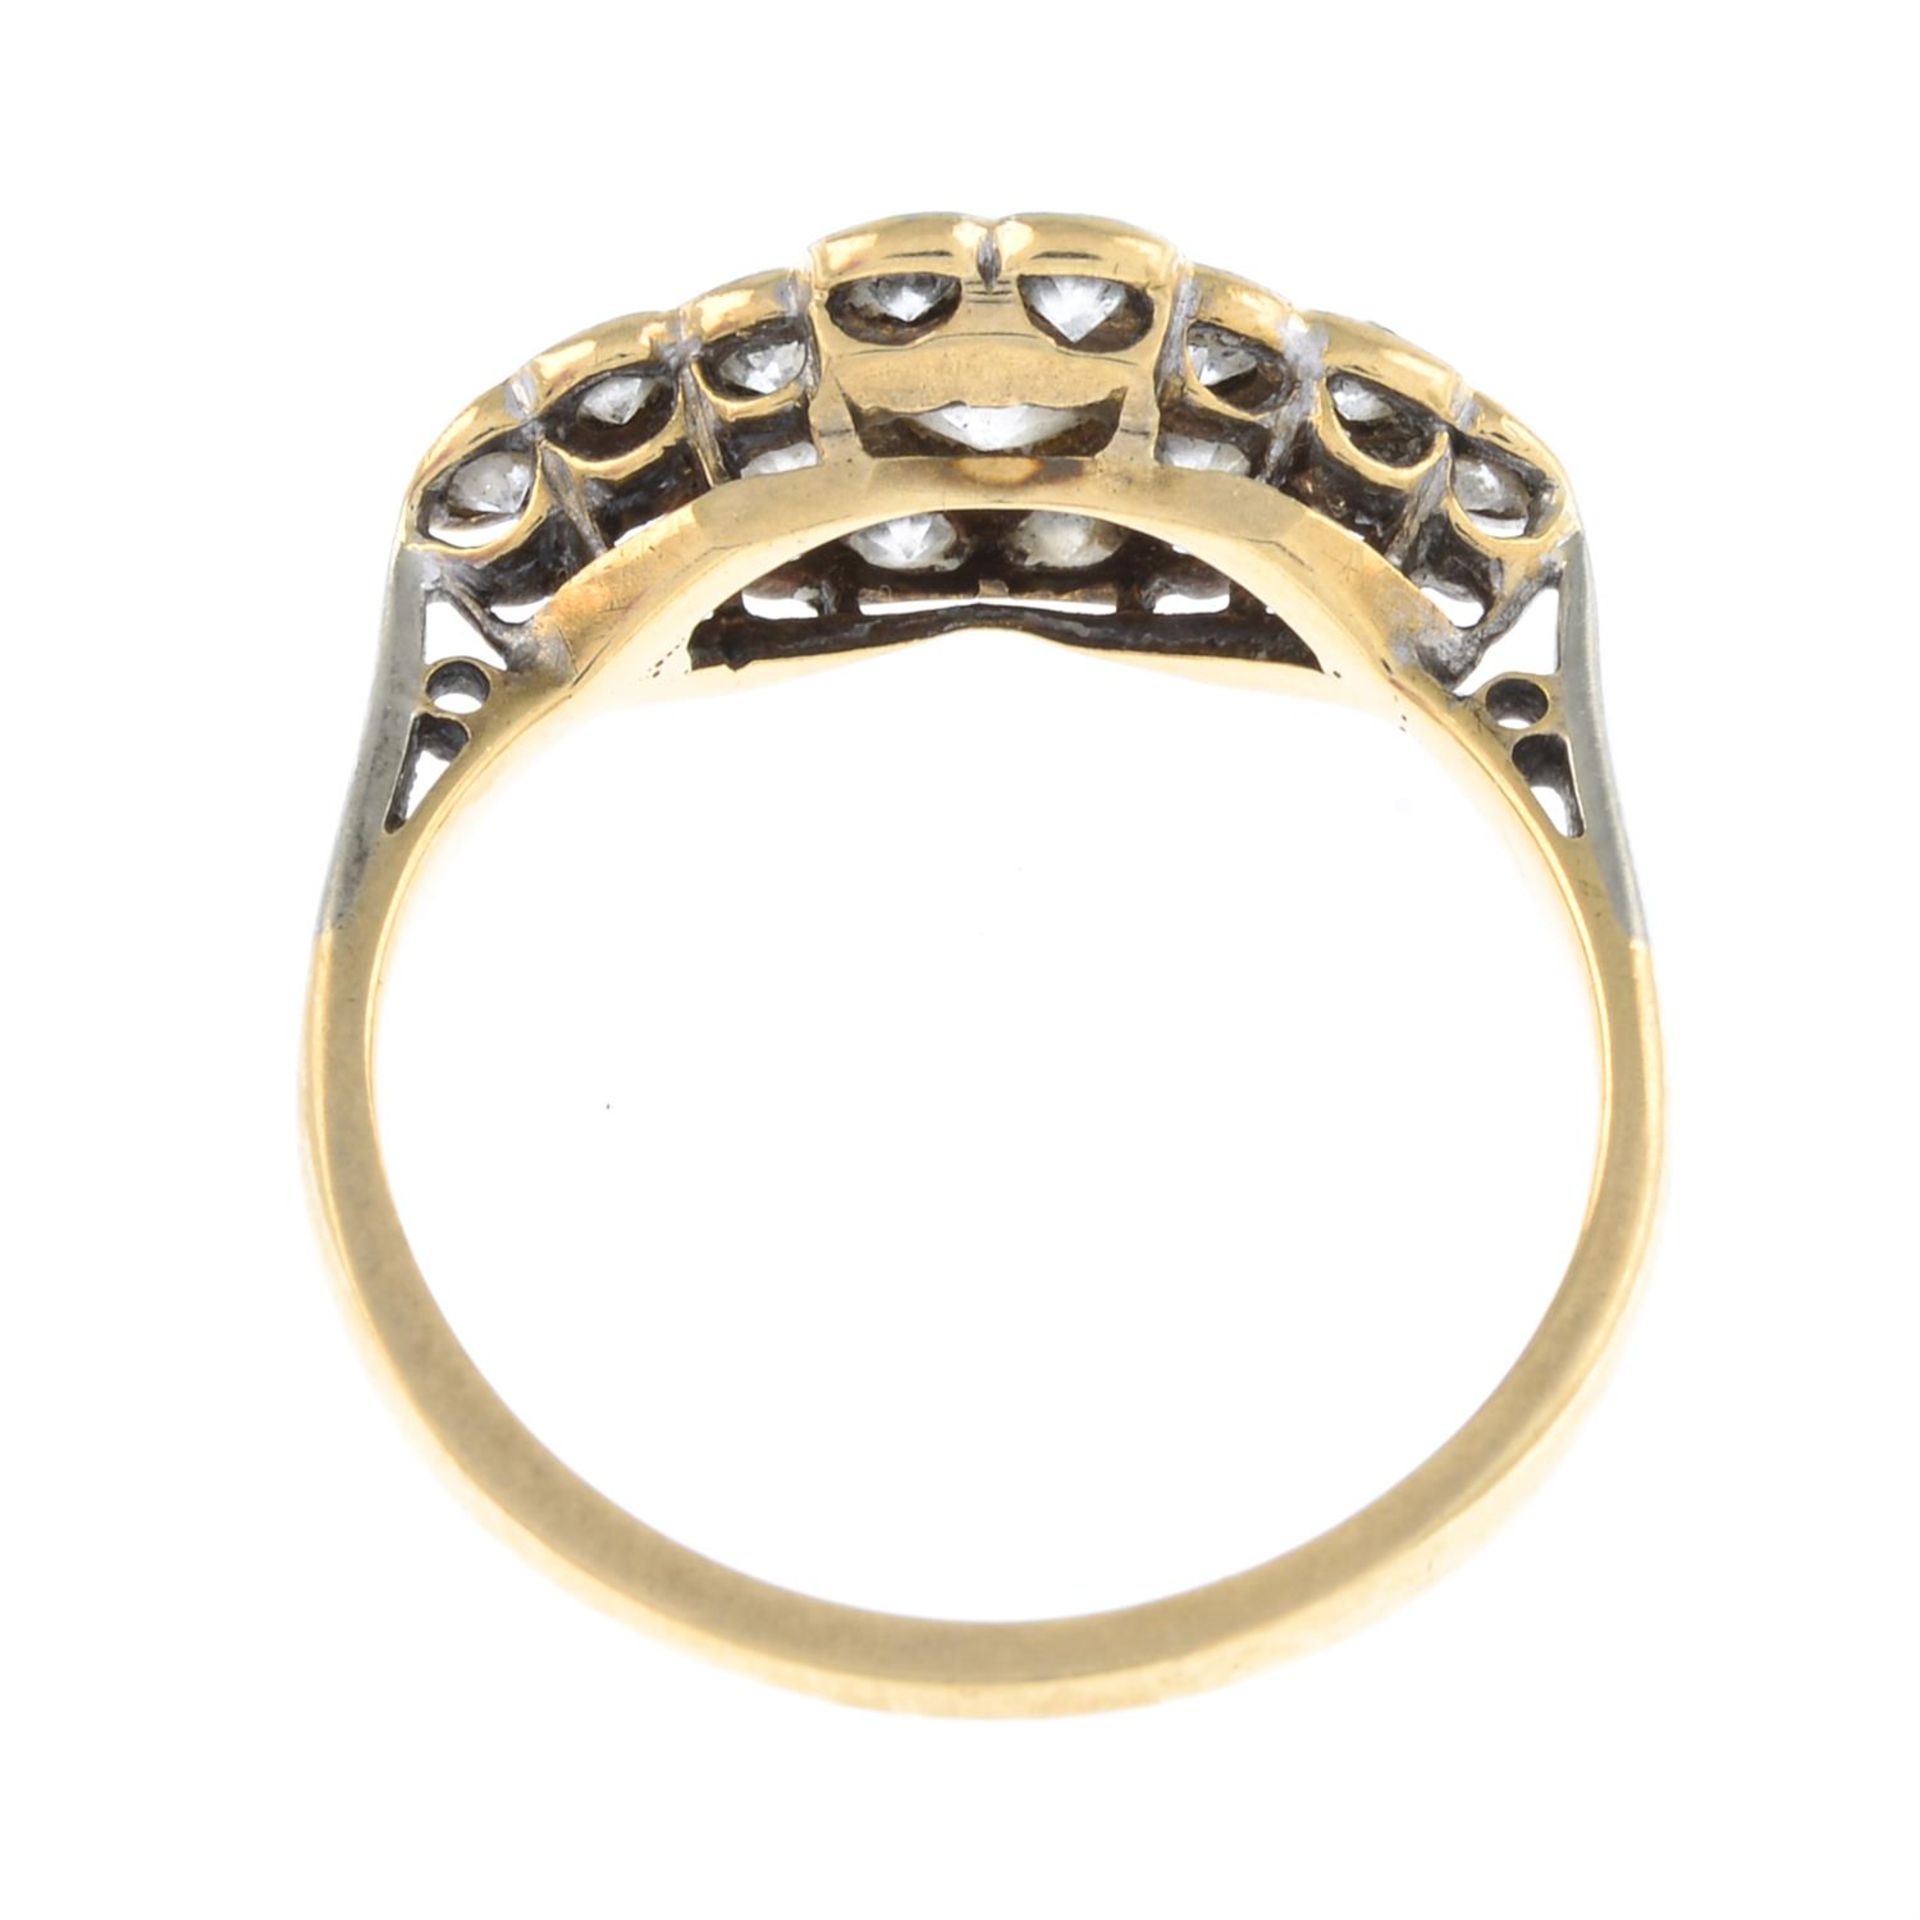 Mid 20th century diamond cluster ring - Image 2 of 2